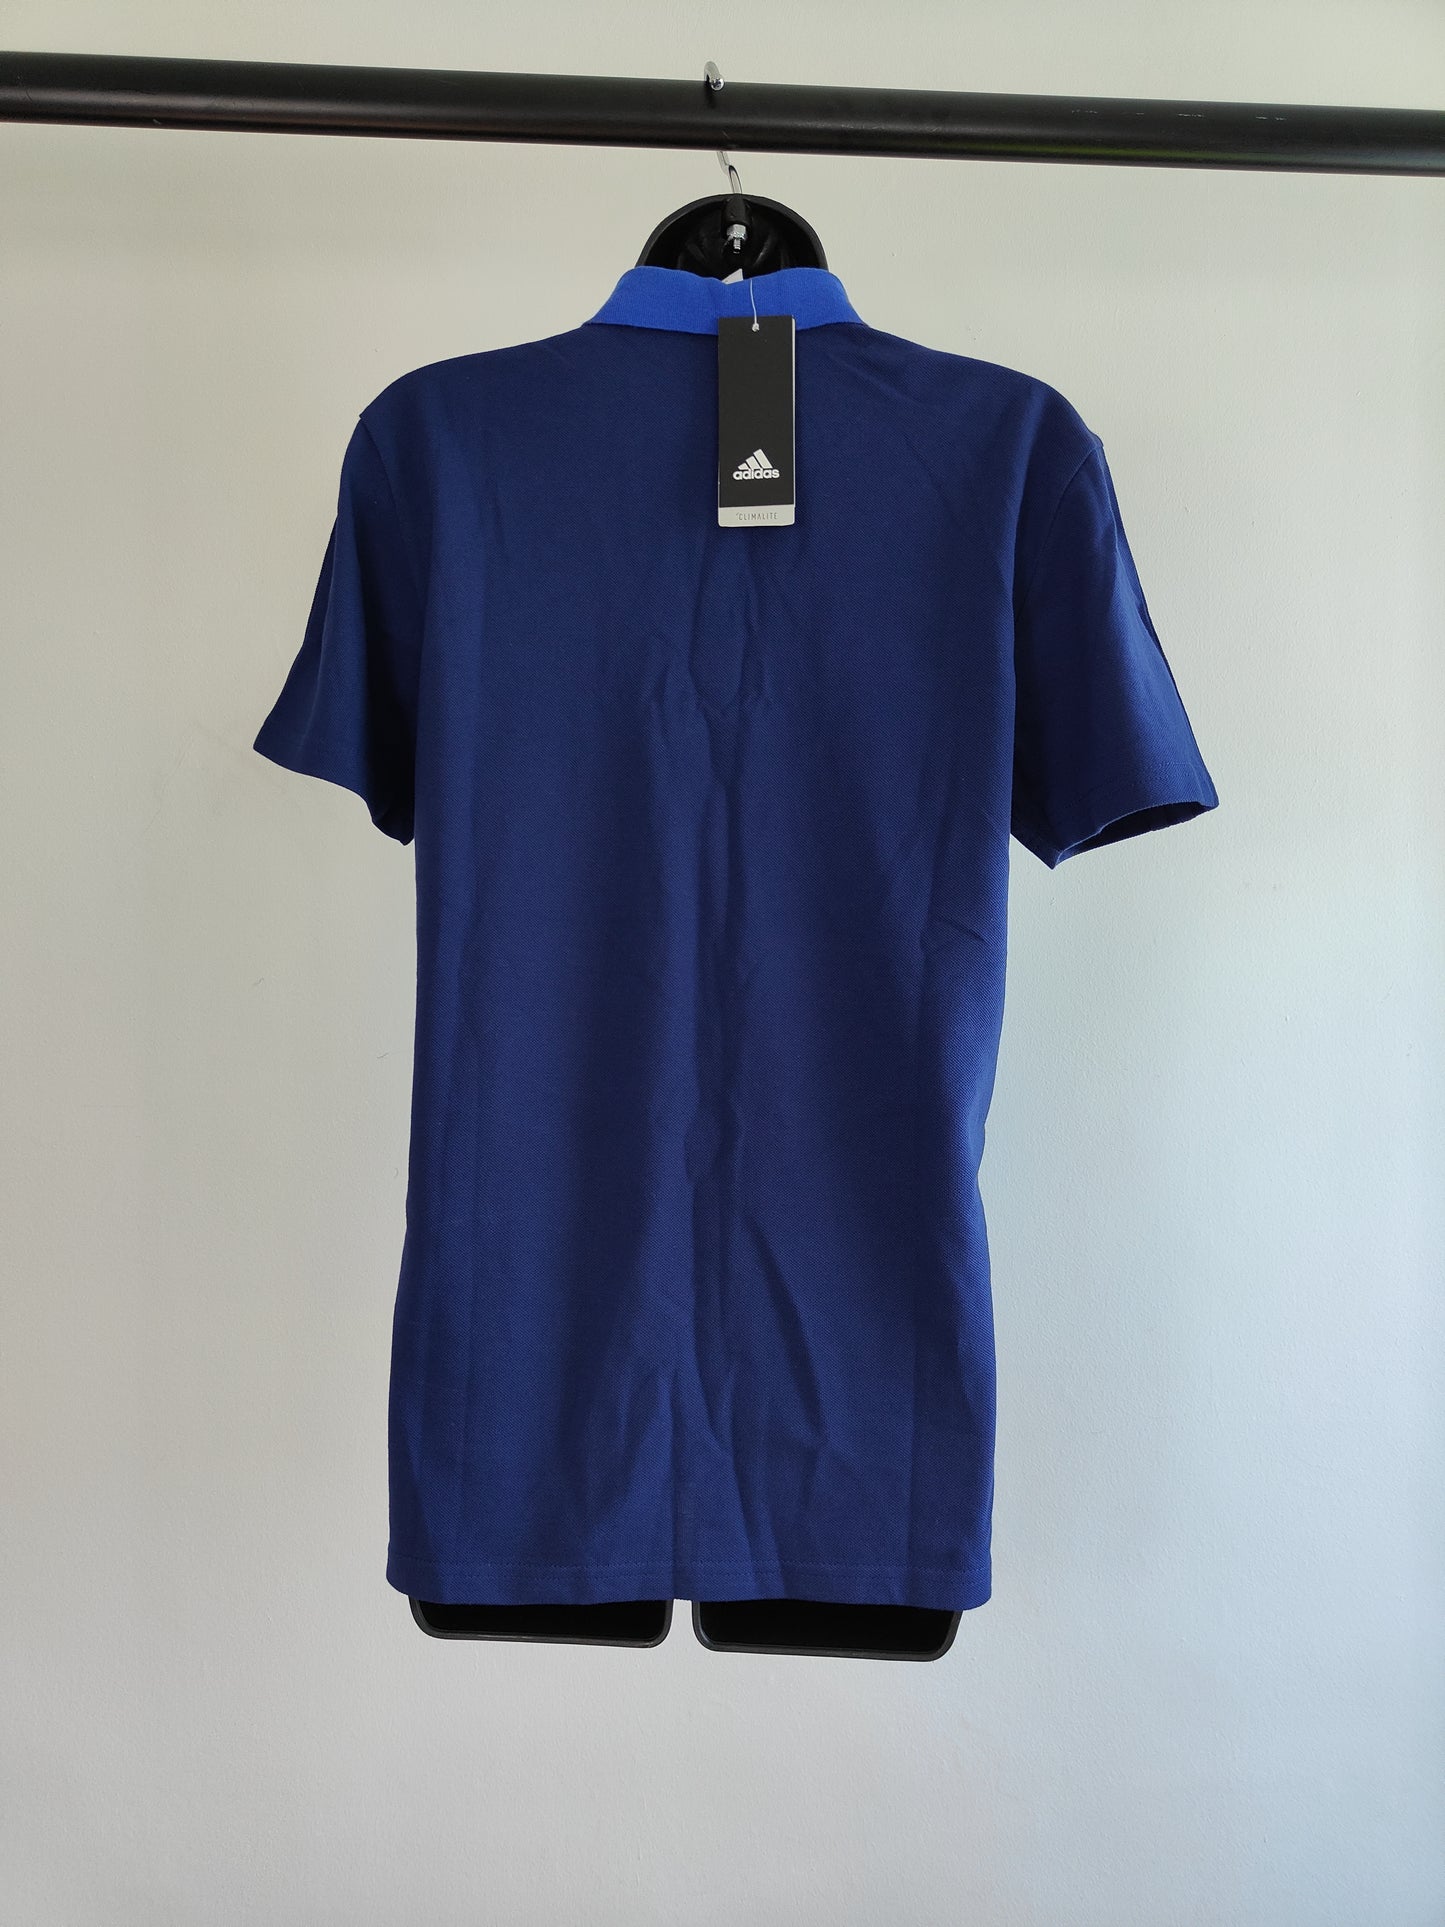 Adidas Women's Polo Shirt in Blue